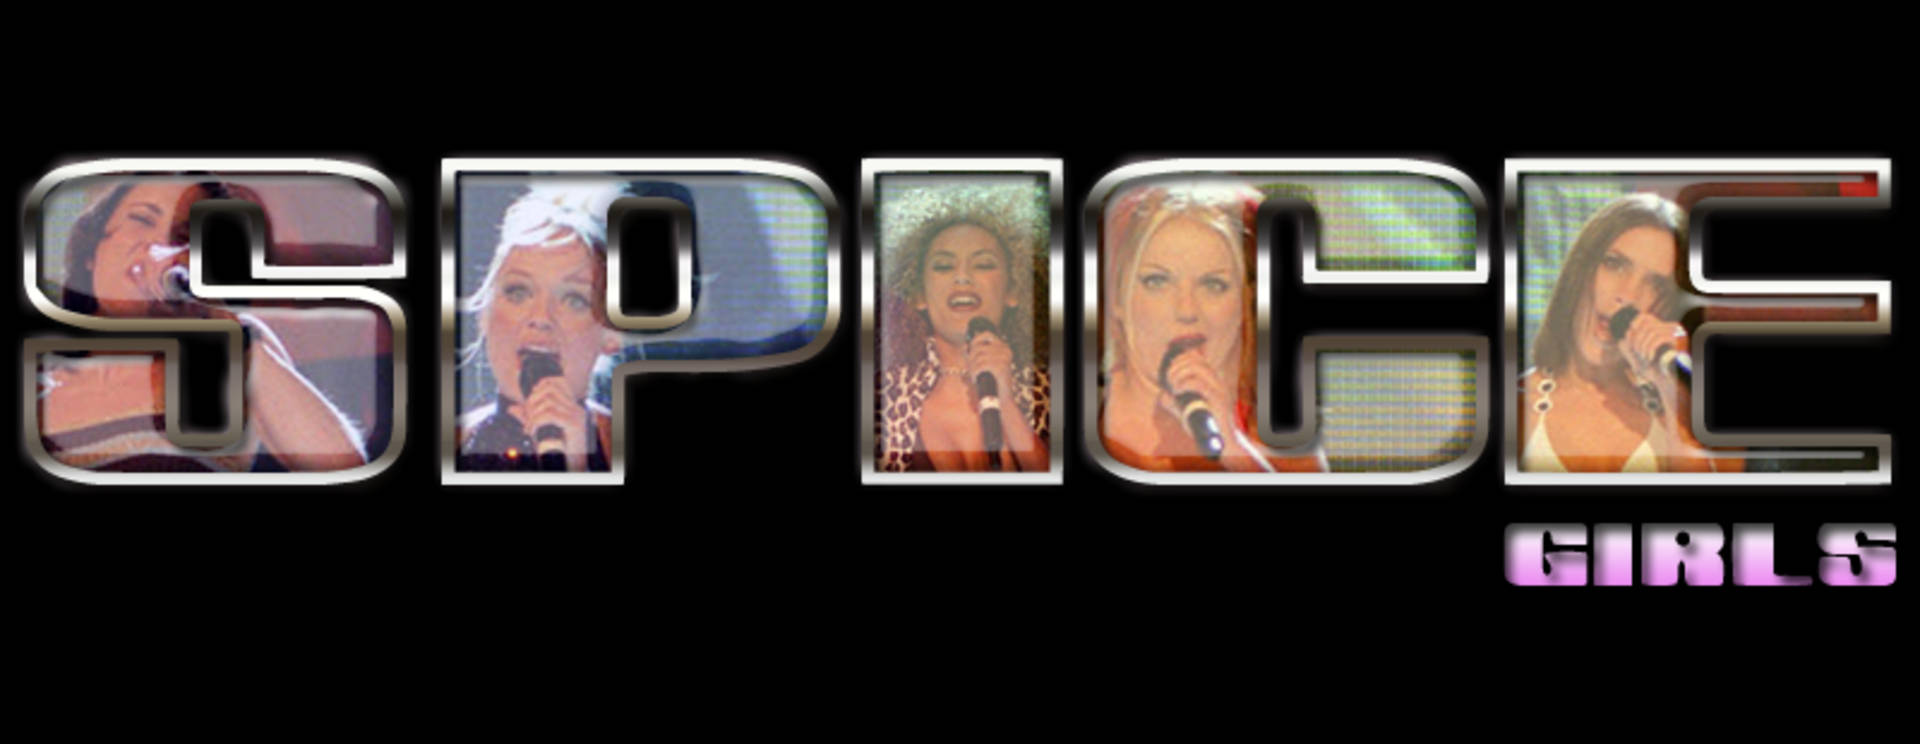 Spice Girls Glossy Art Background